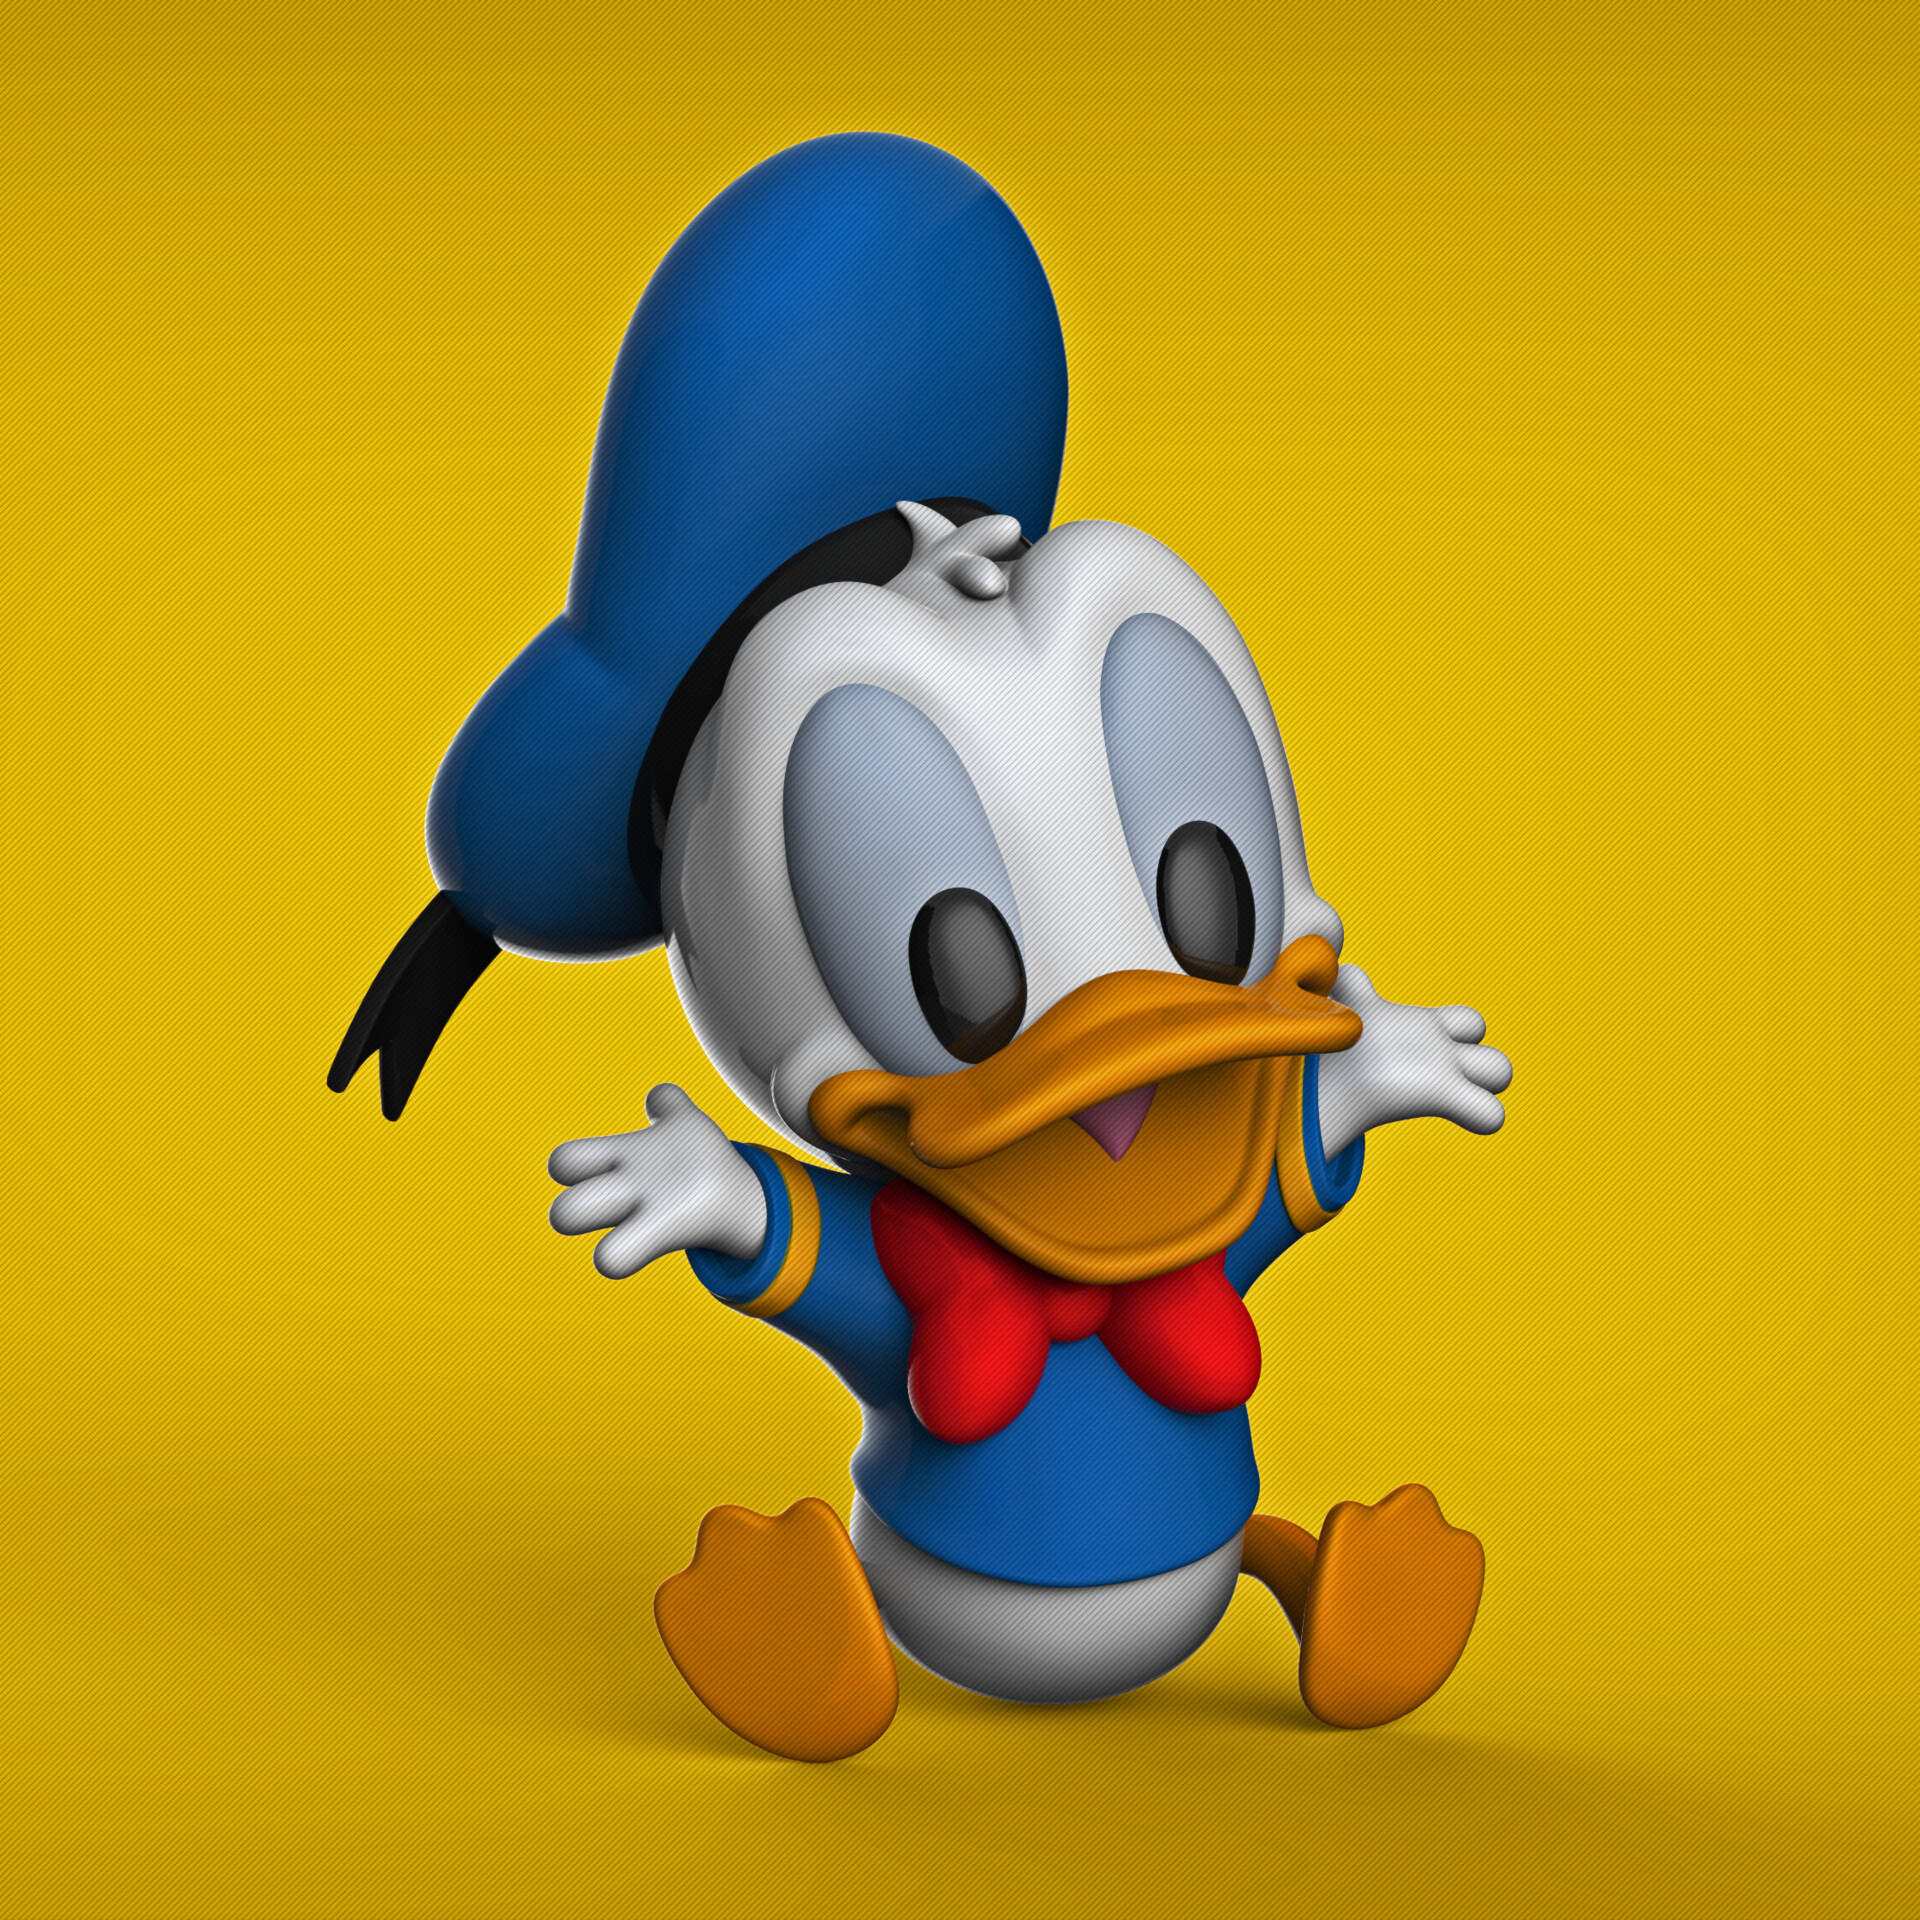 ArtStation - Donald Duck Cute